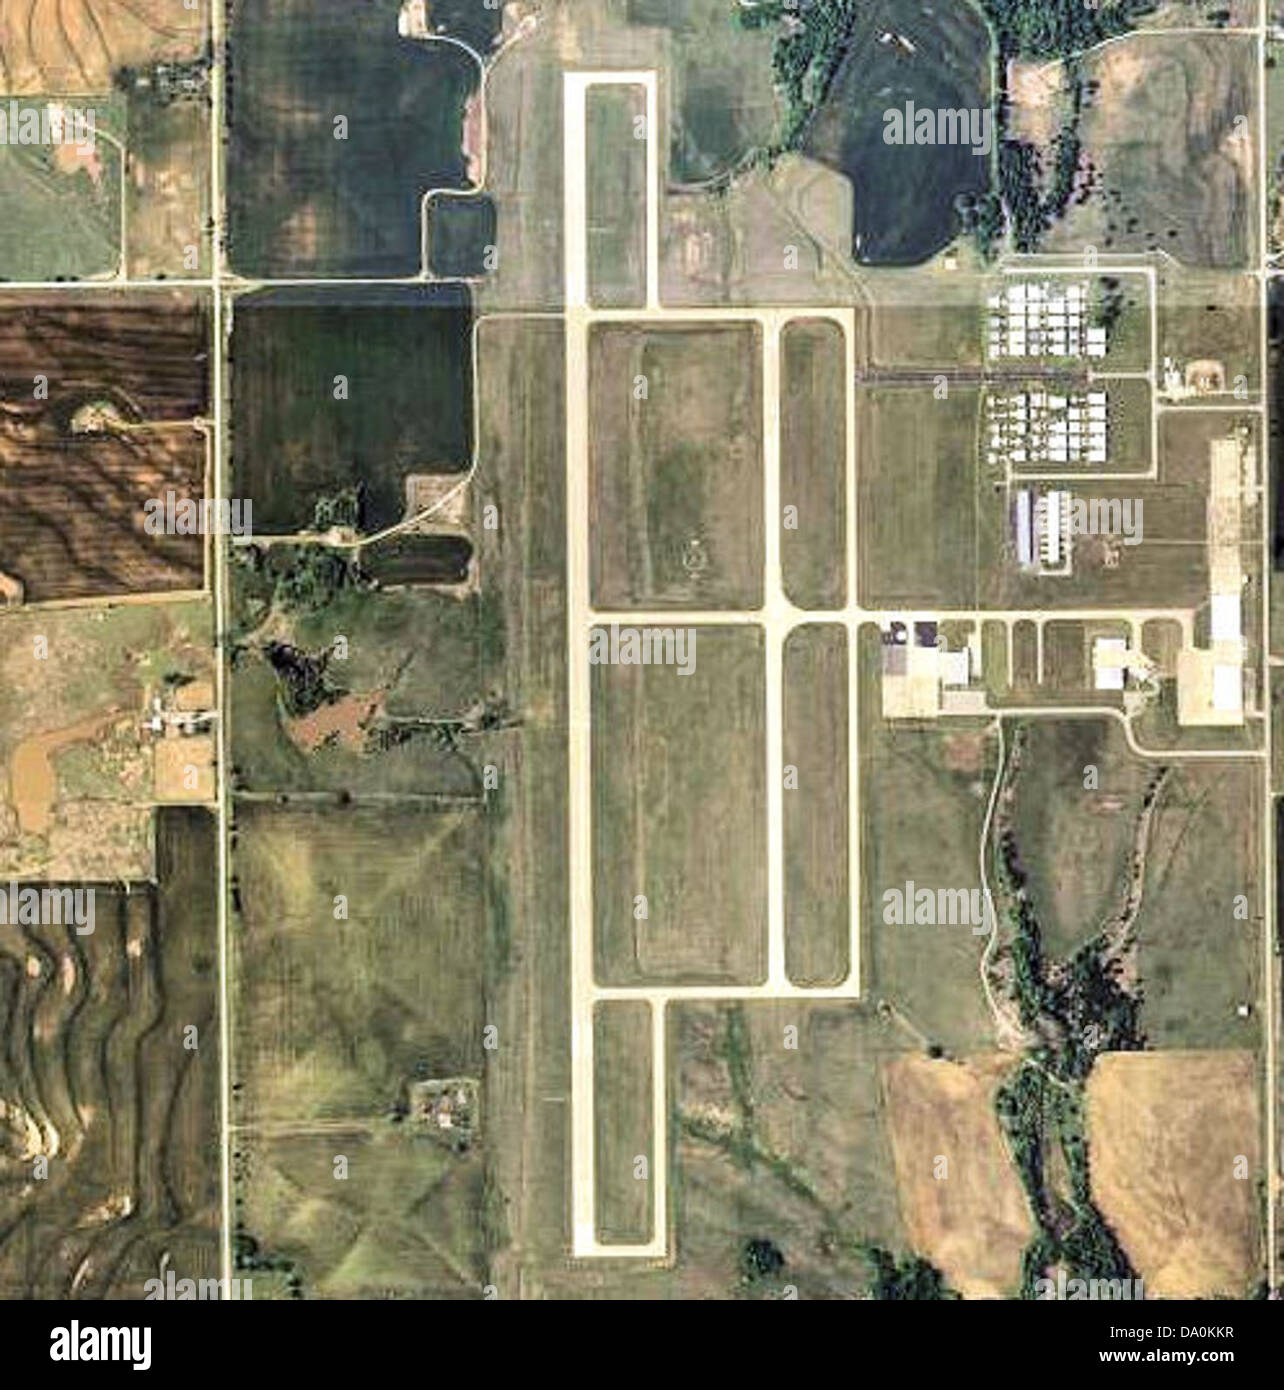 Clarence E. Page Municipal Airport - Oklaholma Stockfoto